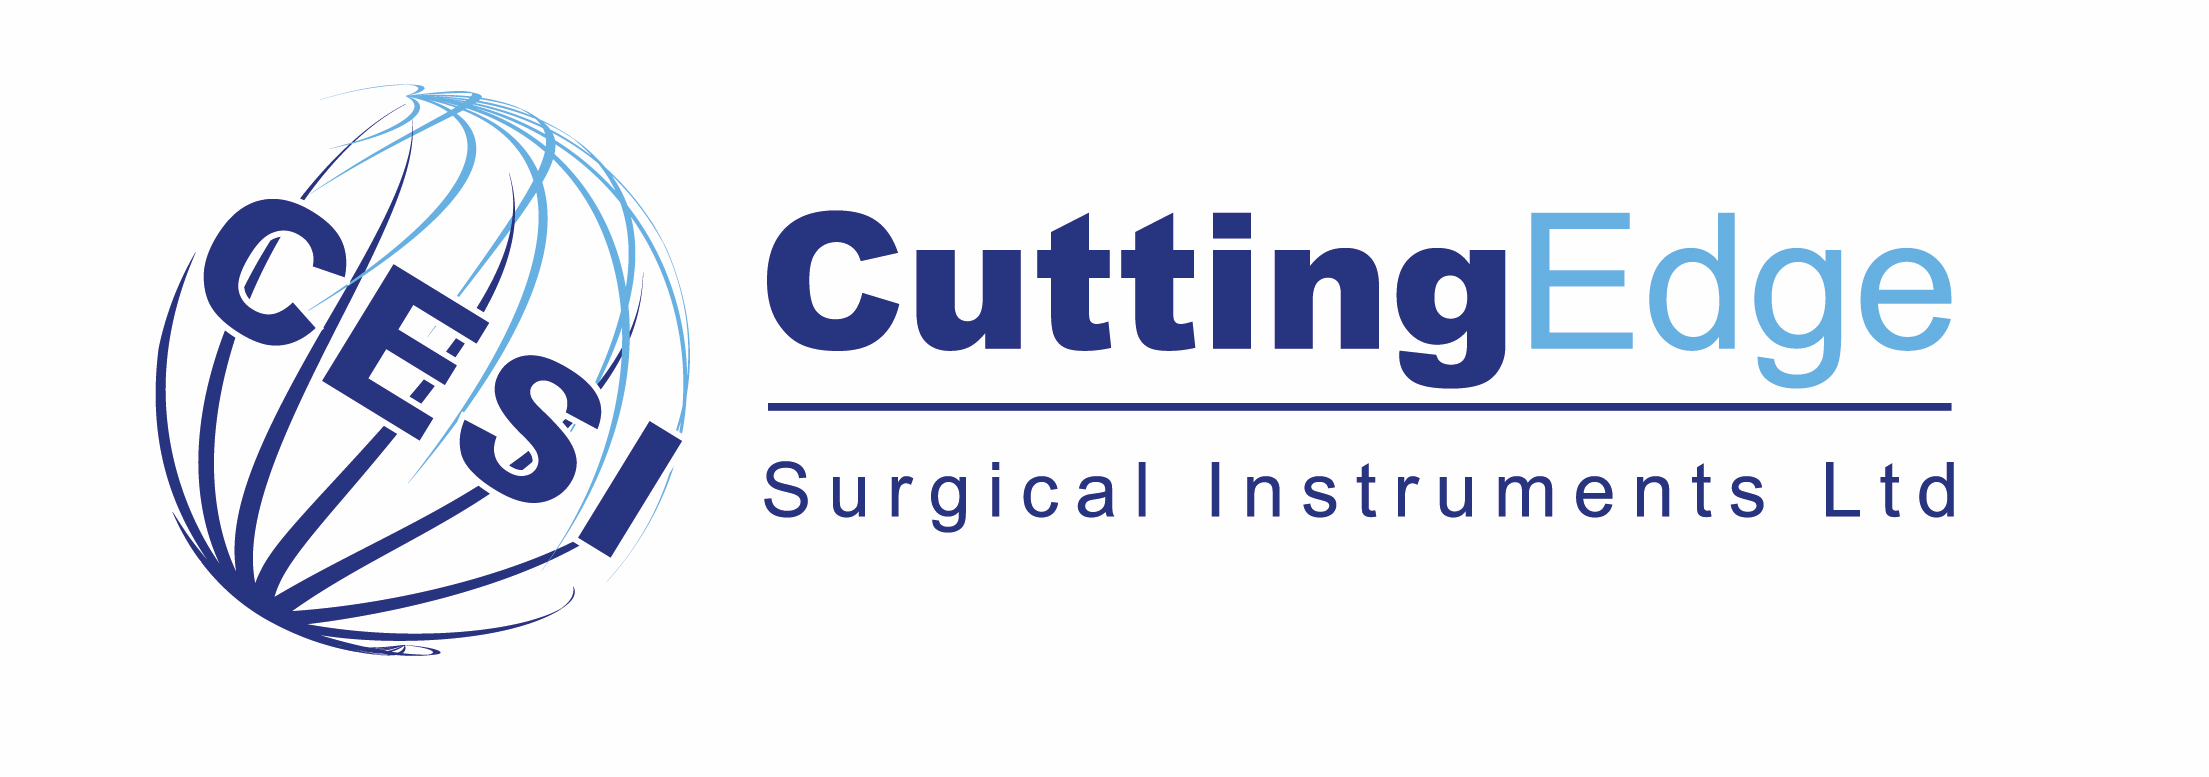 Cutting Edge Surgical Instruments Ltd logo